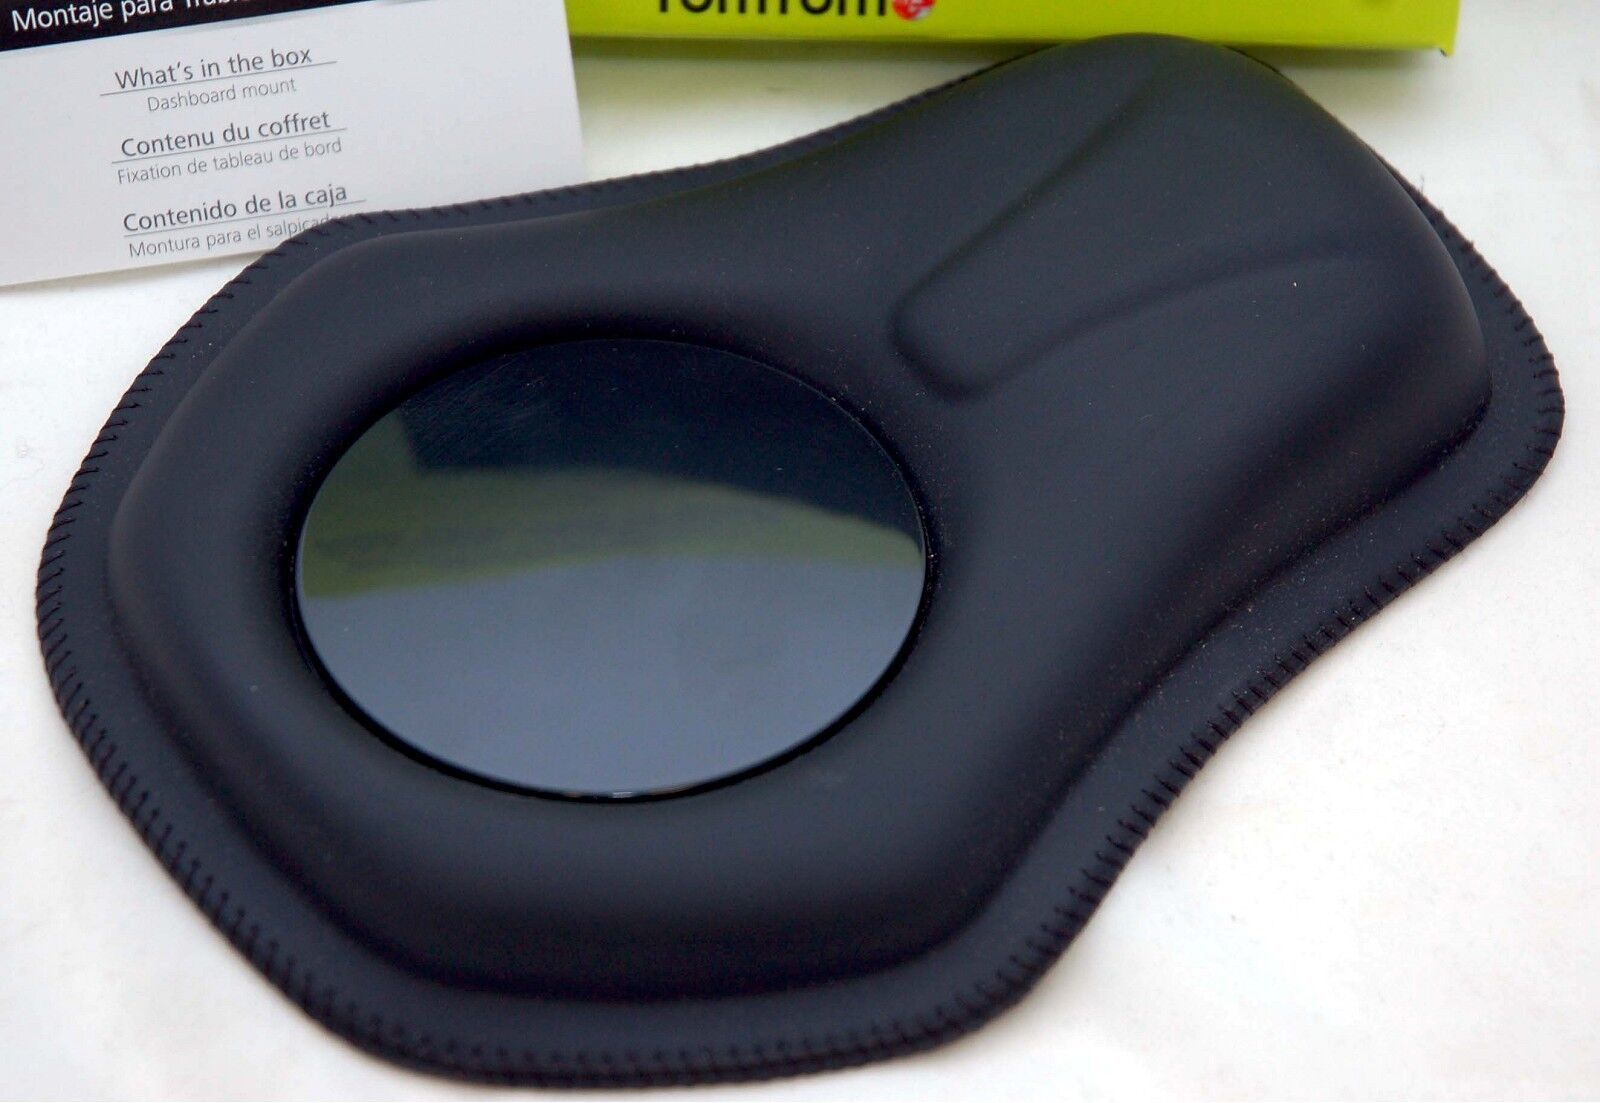 RAM® Form-Fit Cradle for TomTom Start 55, XXL 535, XXL 550 + More – RAM  Mounts